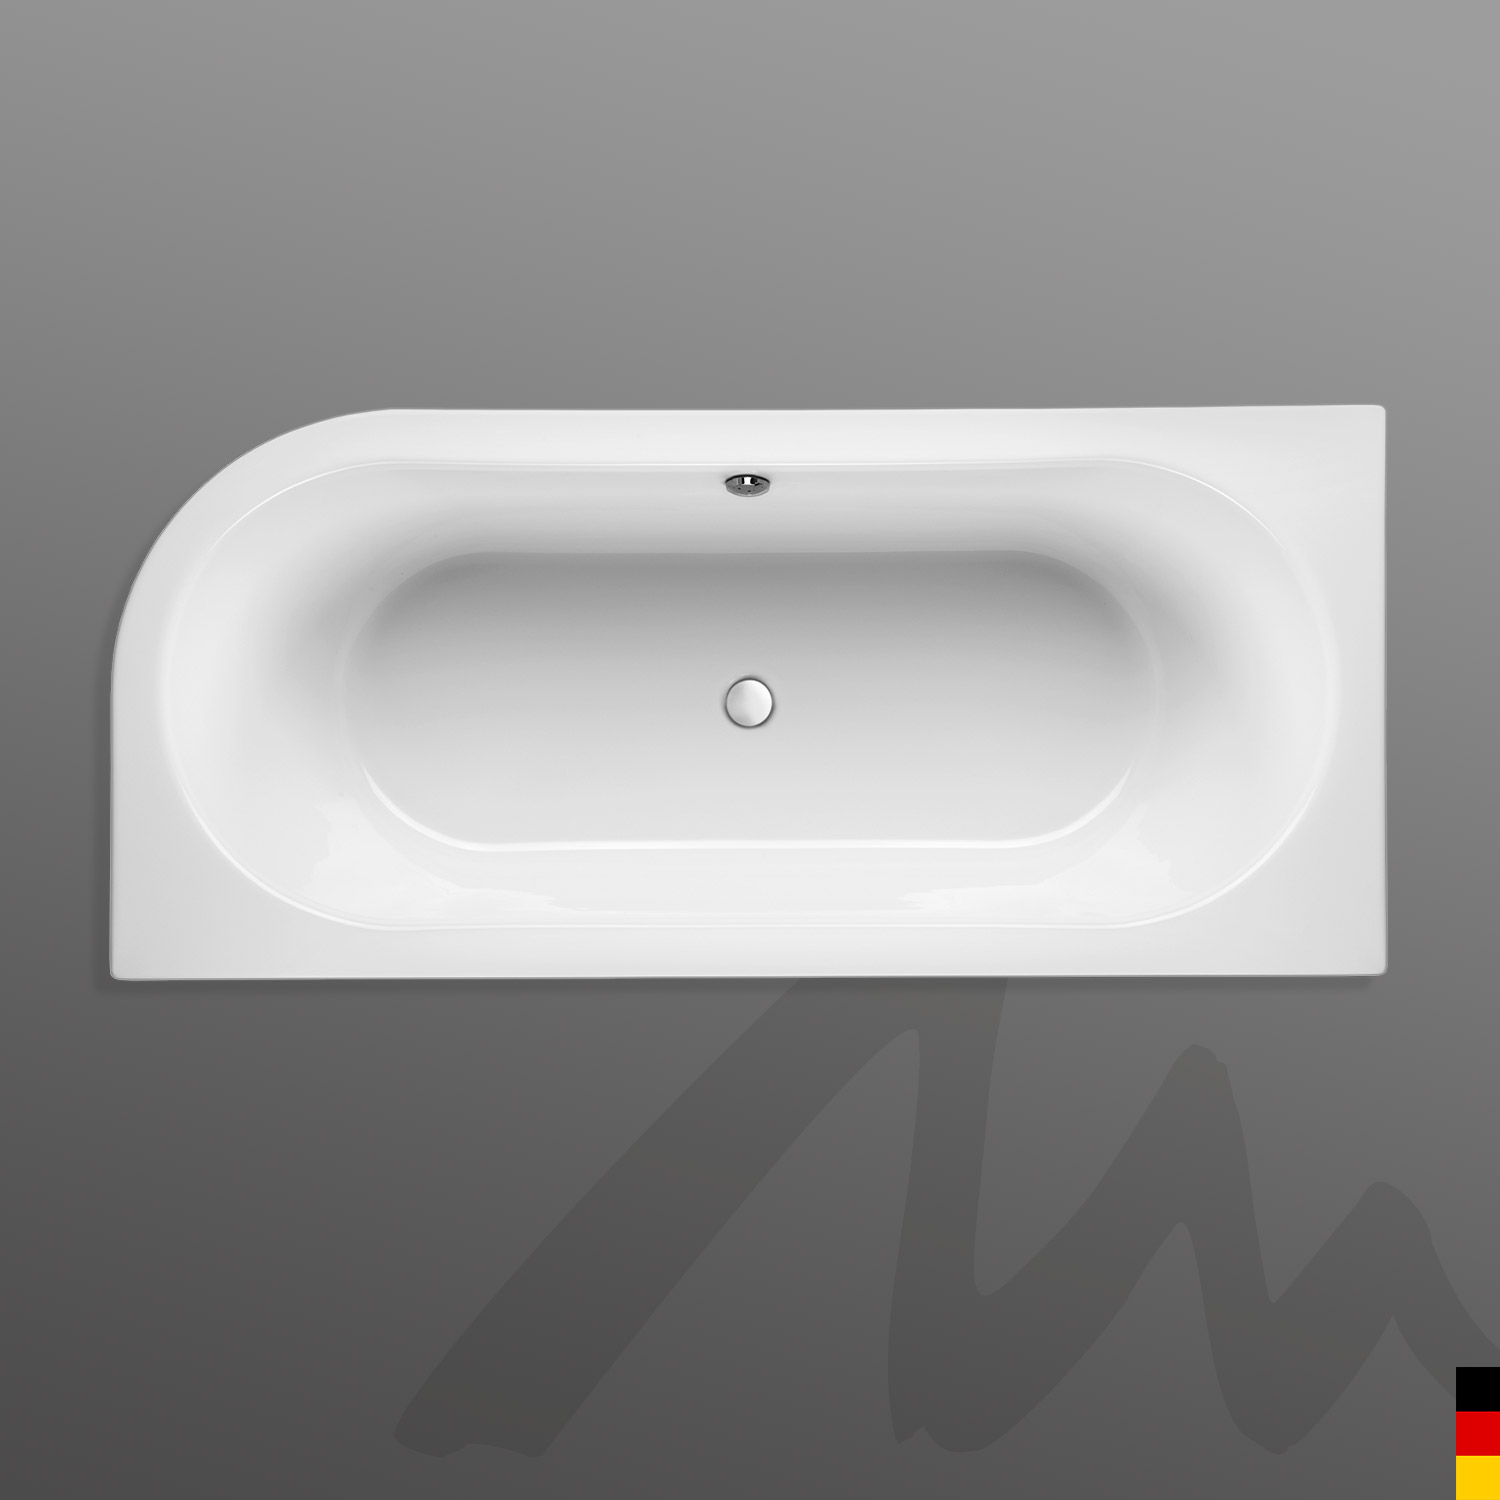 Mauersberger Badewanne Oval Primo 1 - 170/75 duo  Ausführung rechts  170x75x44  Farbe:rein-weiß